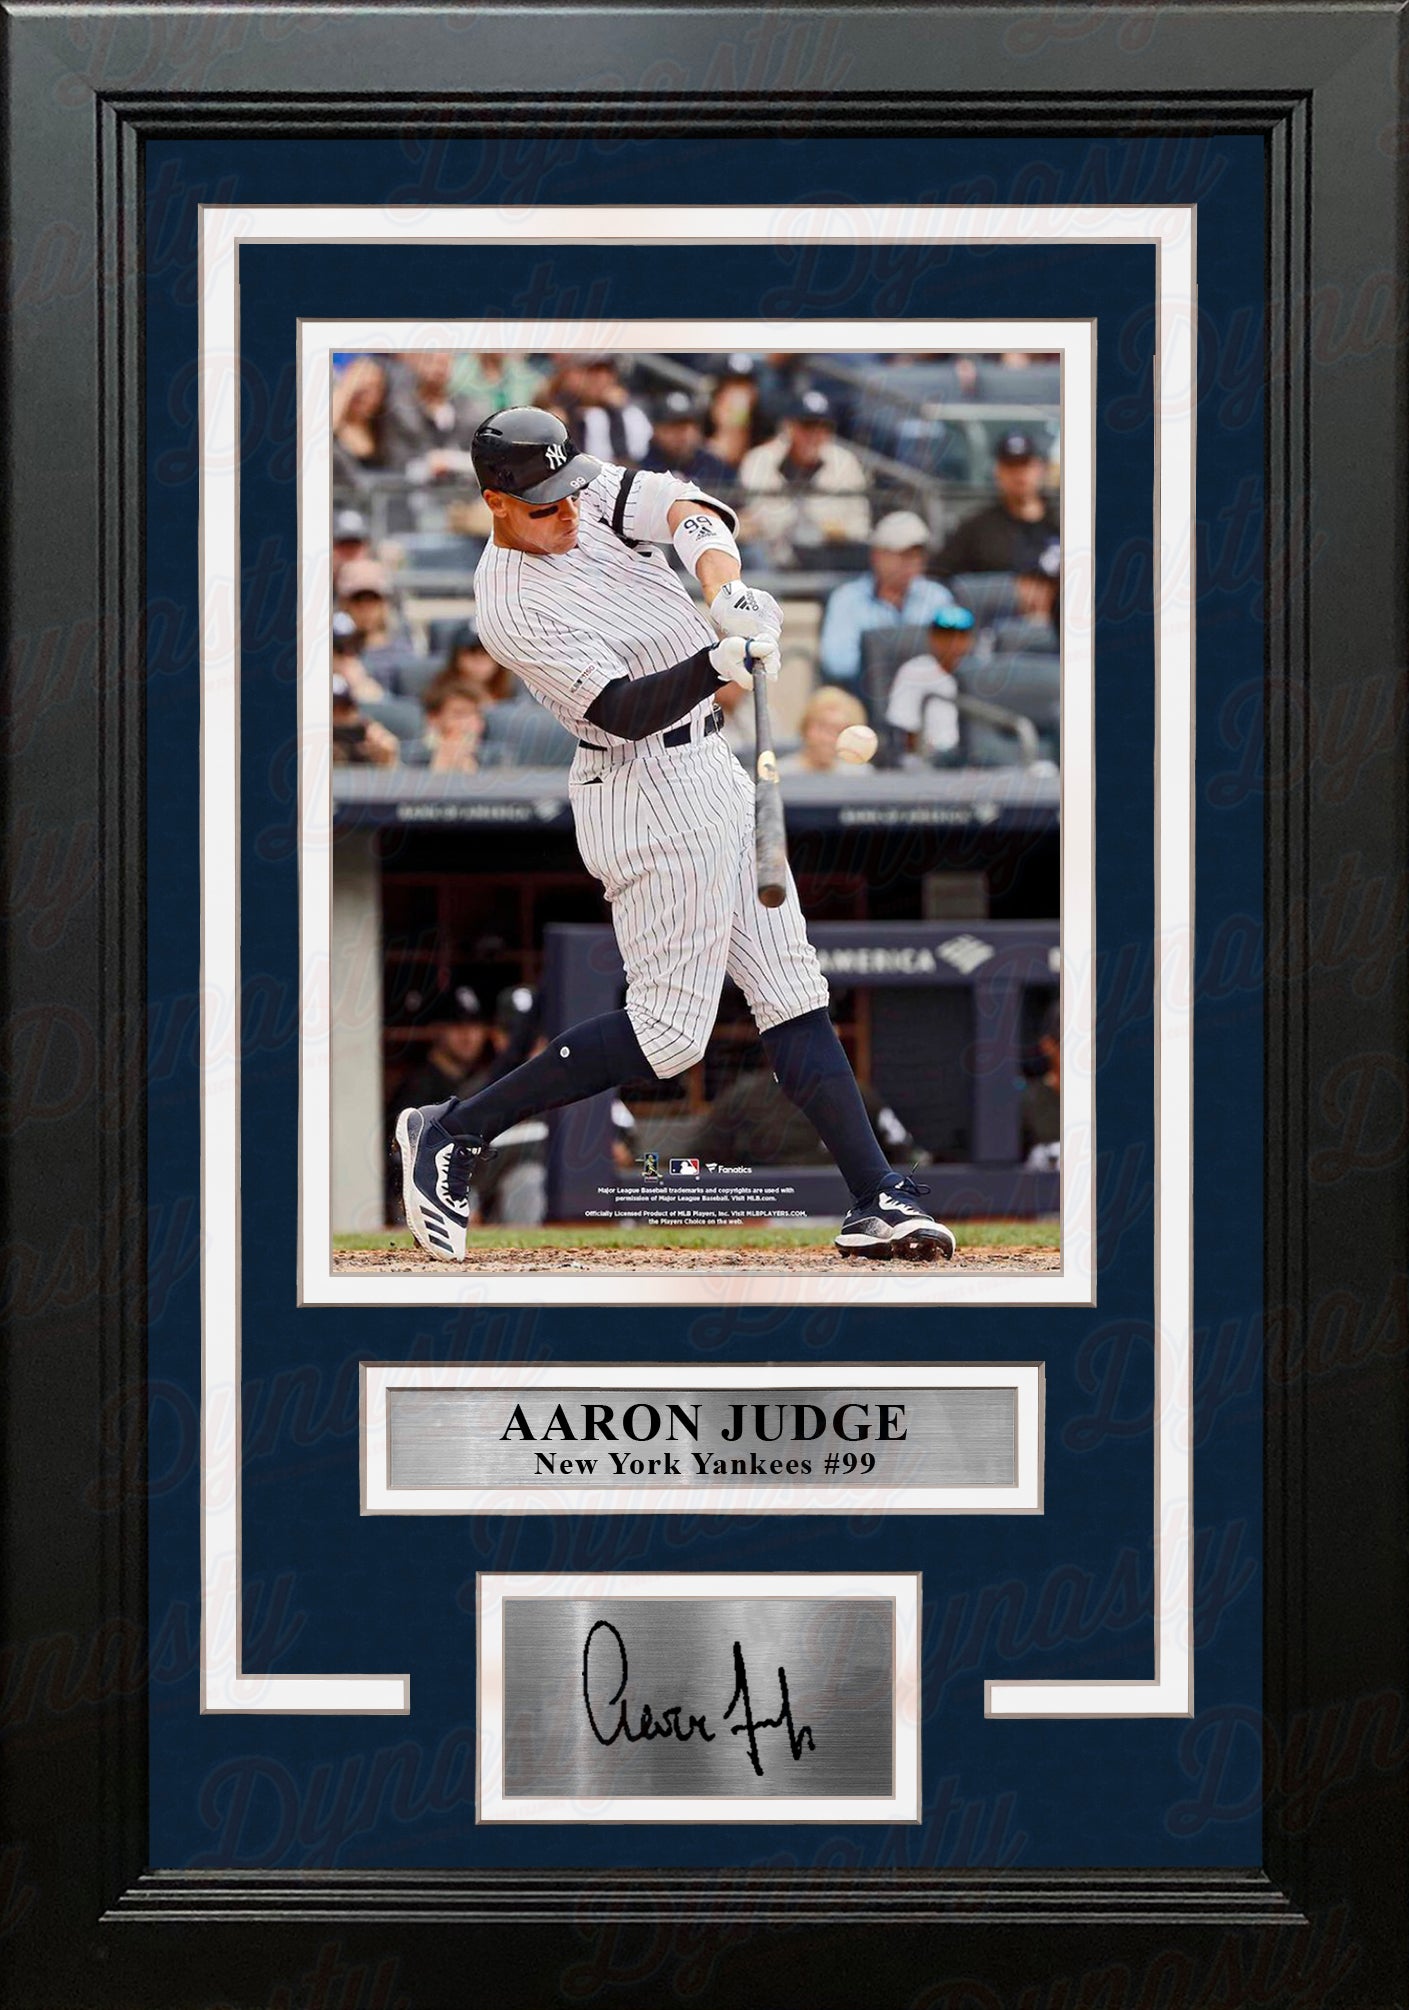 Aaron Judge Certified Autograph Baseball Card